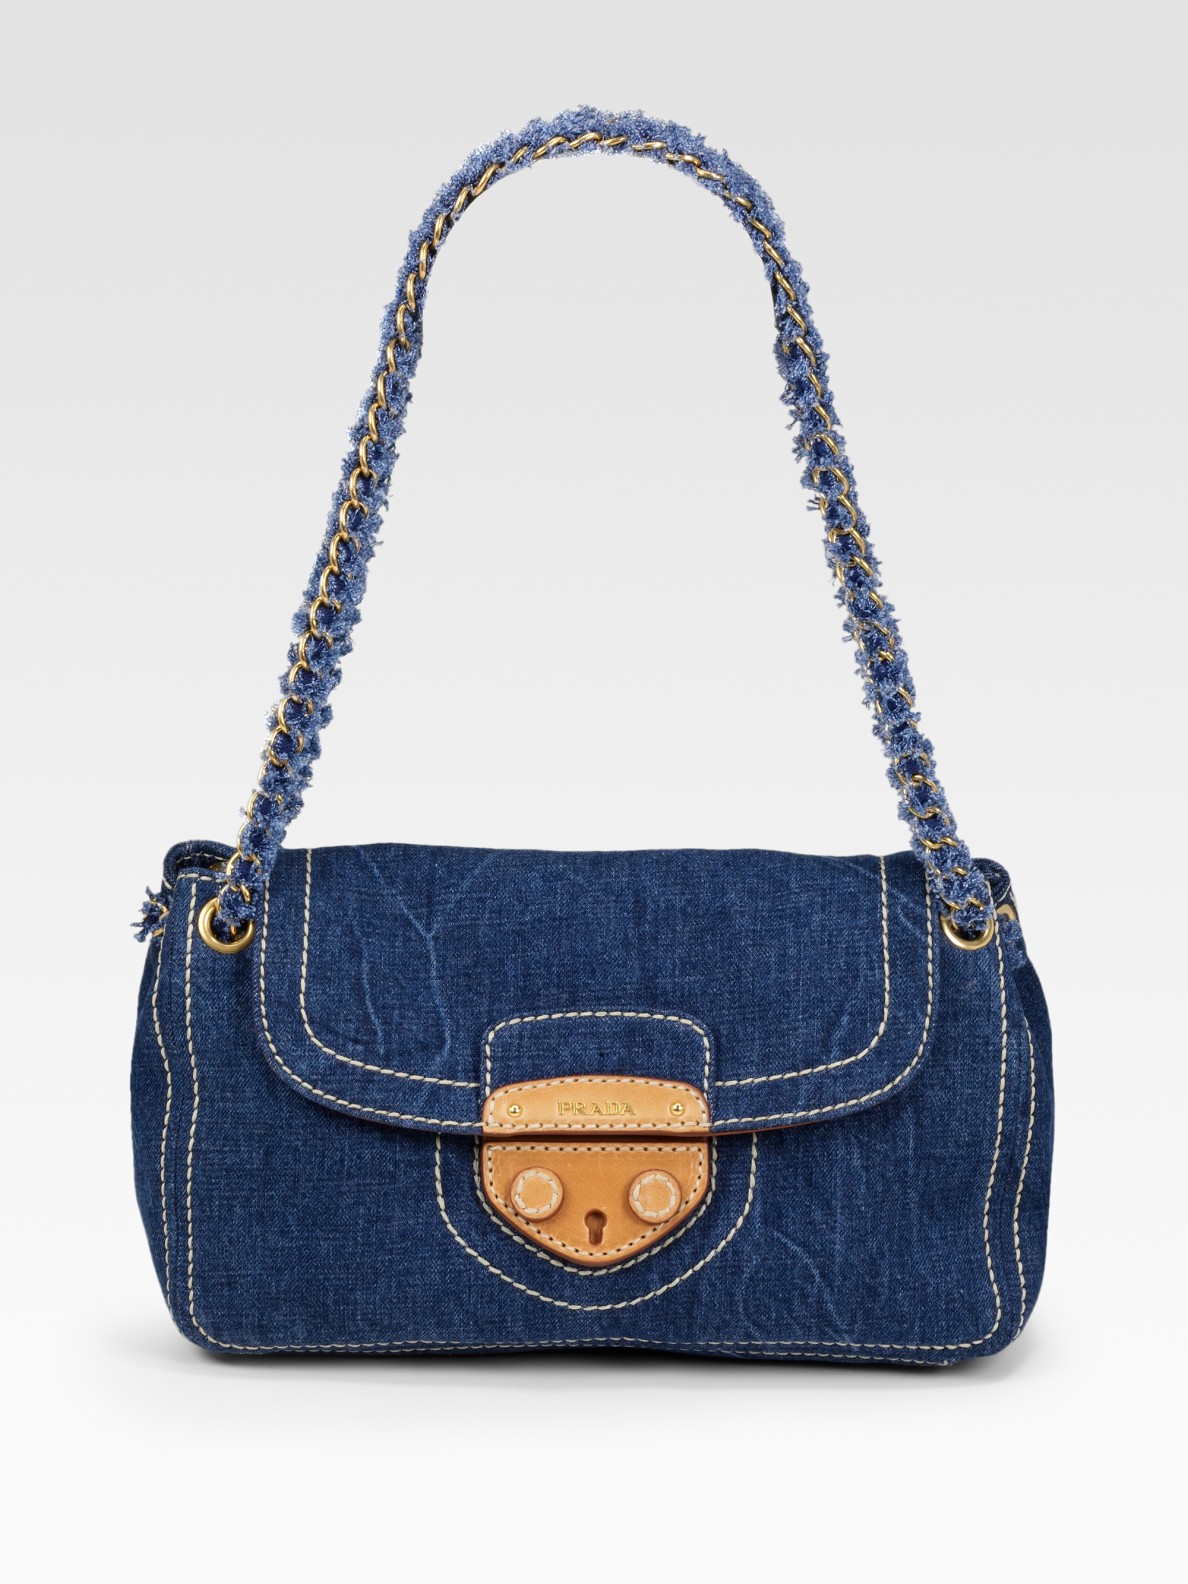 Prada Denim Shoulder Bag in Blue (denim) | Lyst